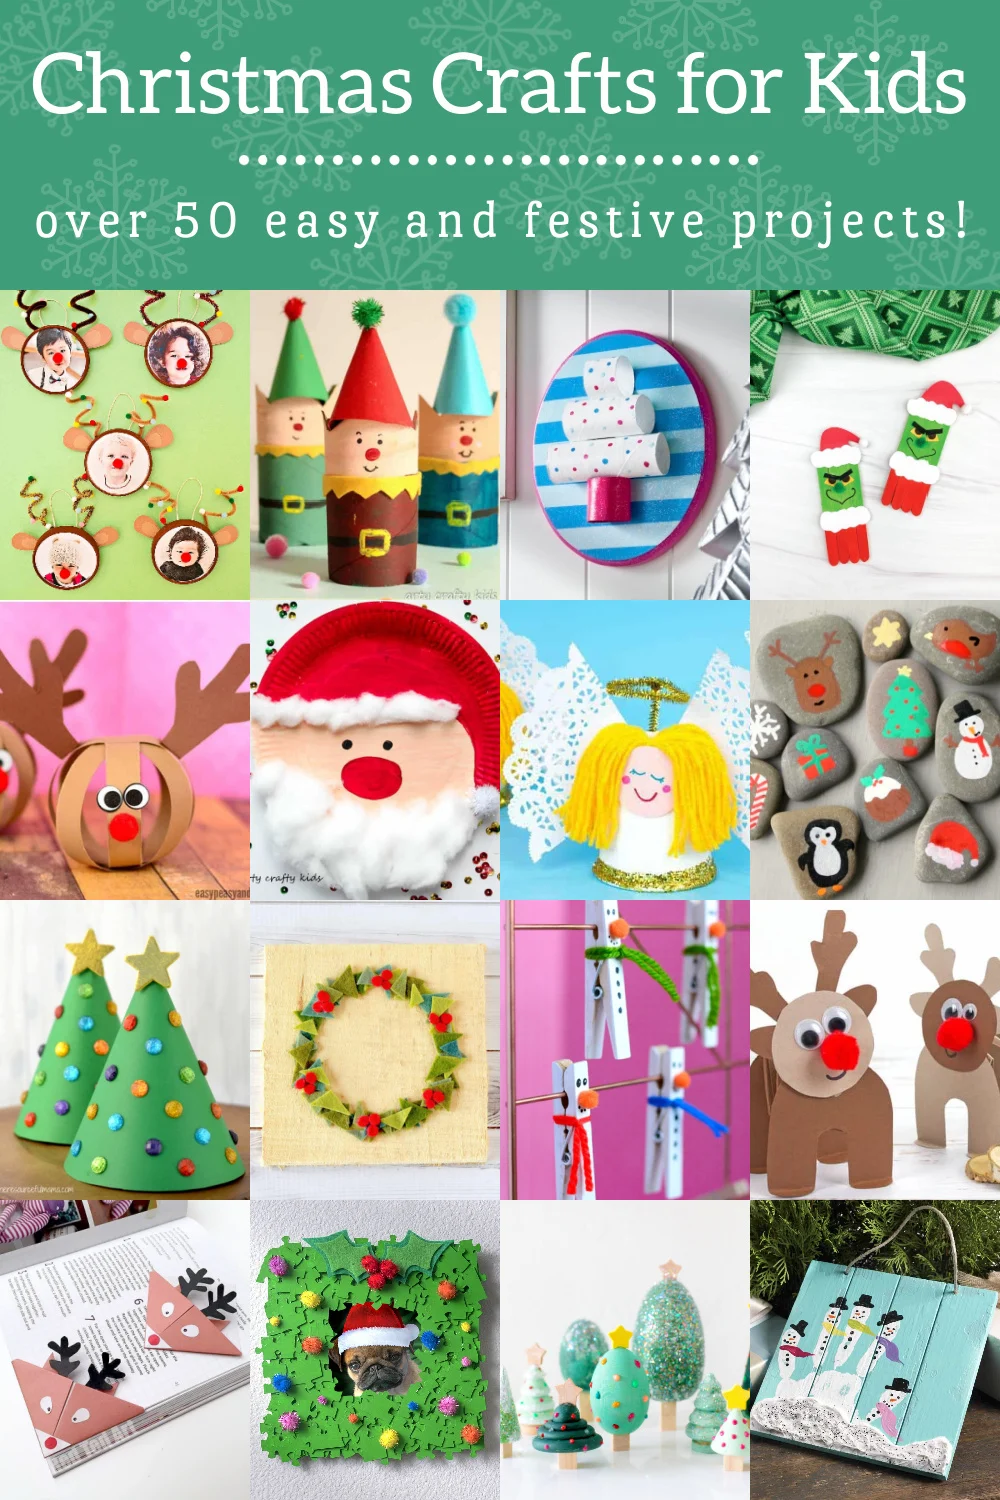 https://modpodgerocksblog.b-cdn.net/wp-content/uploads/2021/11/Christmas-Crafts-for-Kids.jpg.webp